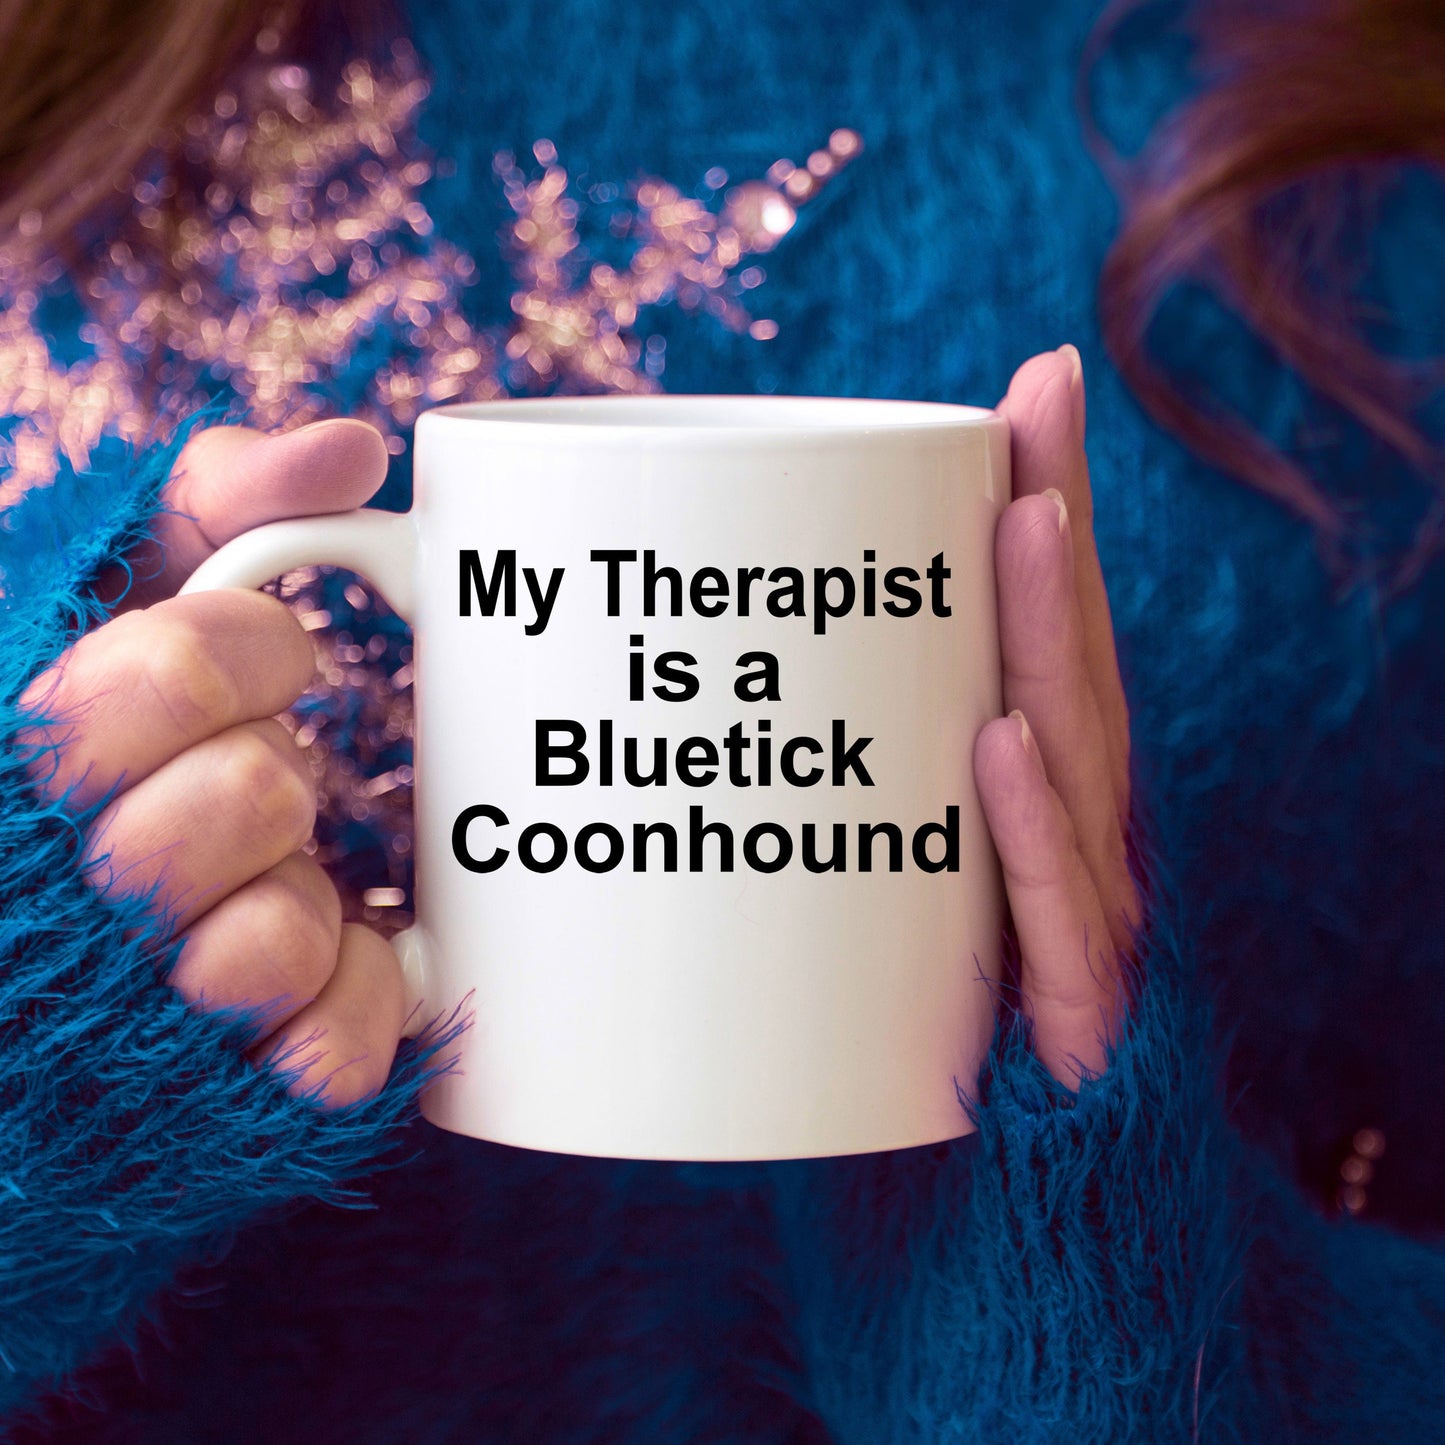 Bluetick Coonhound Dog Therapist Mug